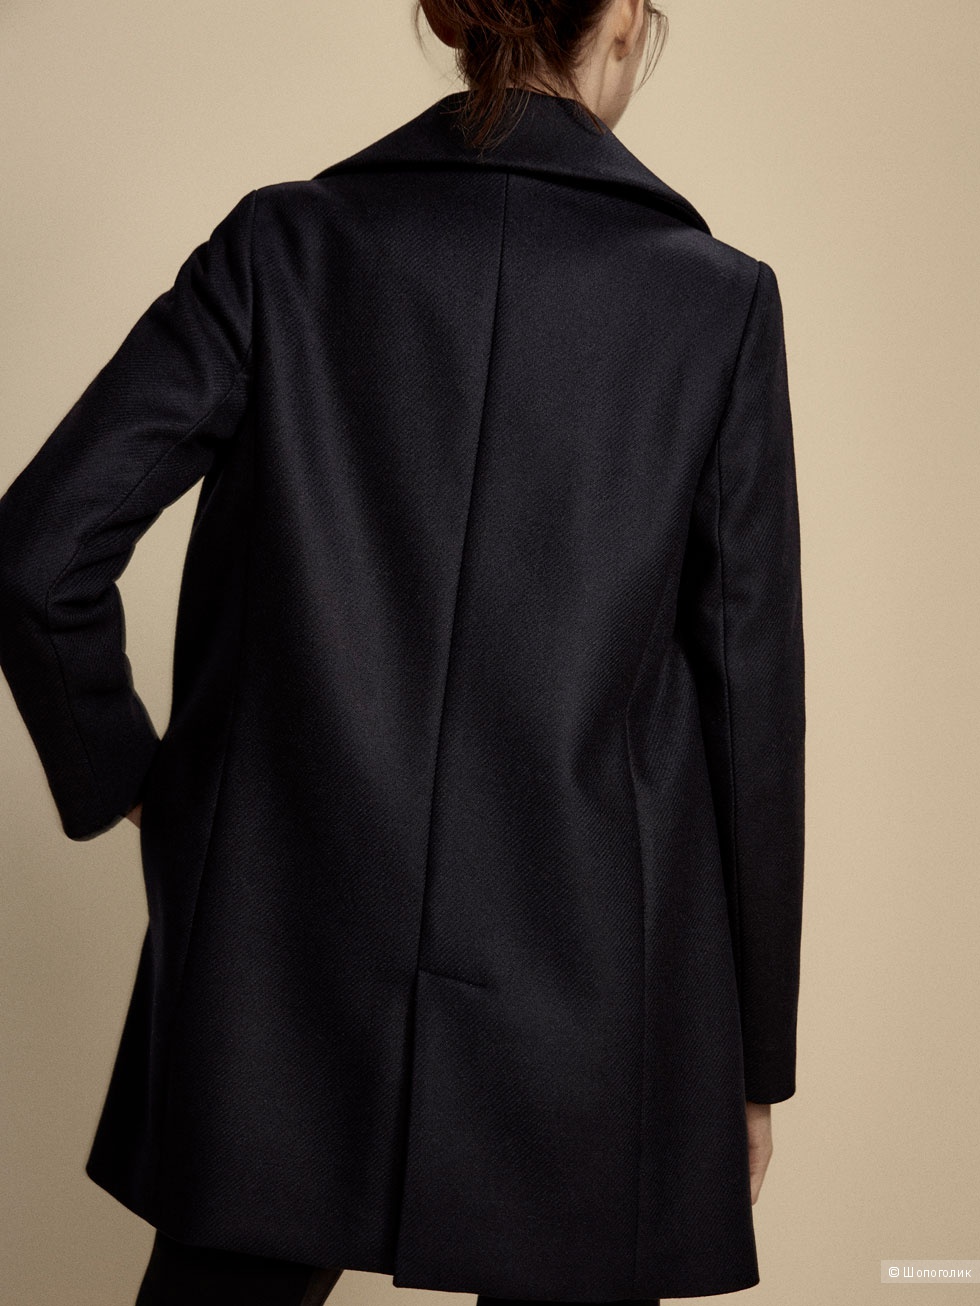 Пальто Massimo Dutti 36 размера (S-M)